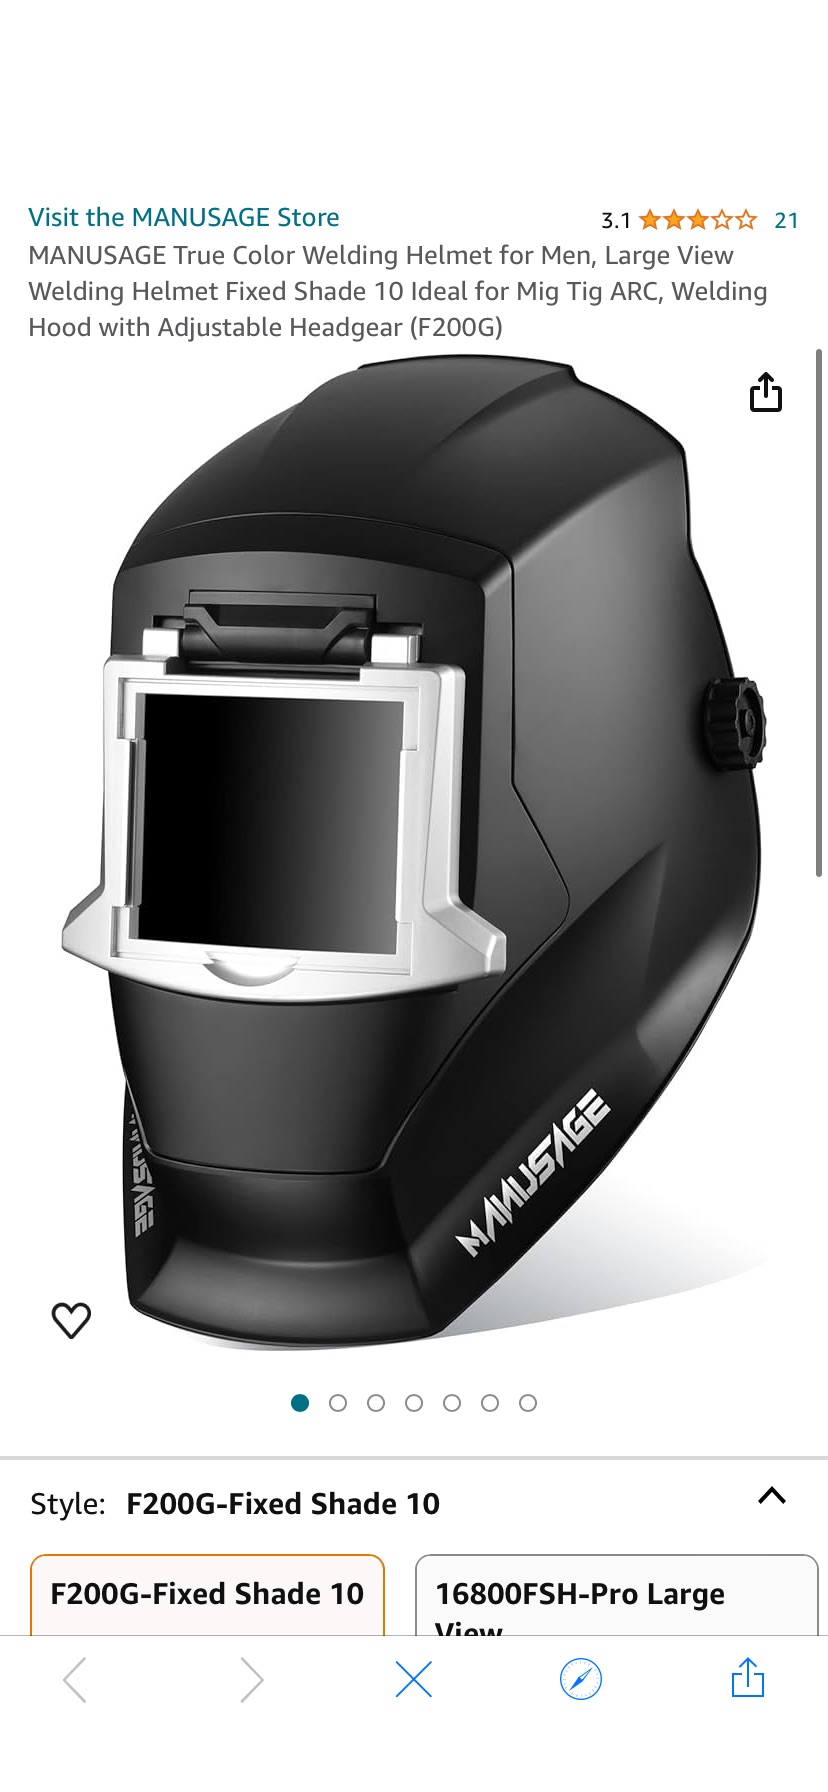 MANUSAGE True Color Welding Helmet for Men, Large View Welding Helmet Fixed Shade 10 Ideal for Mig Tig ARC, Welding Hood with Adjustable Headgear (F200G) - Amazon.com